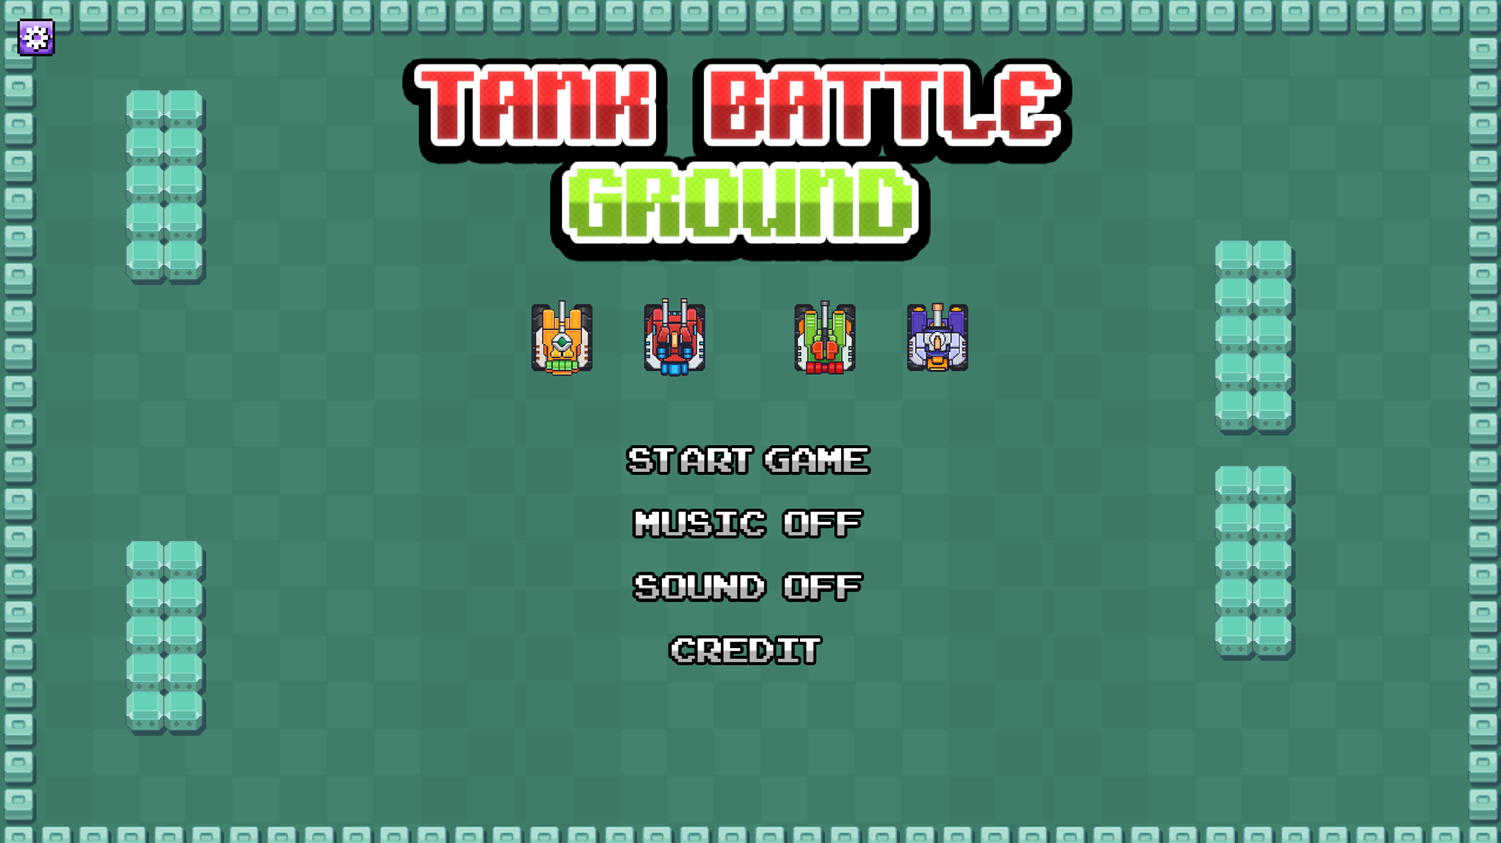 Tank Battle Ground Game Welcome Screenshot.